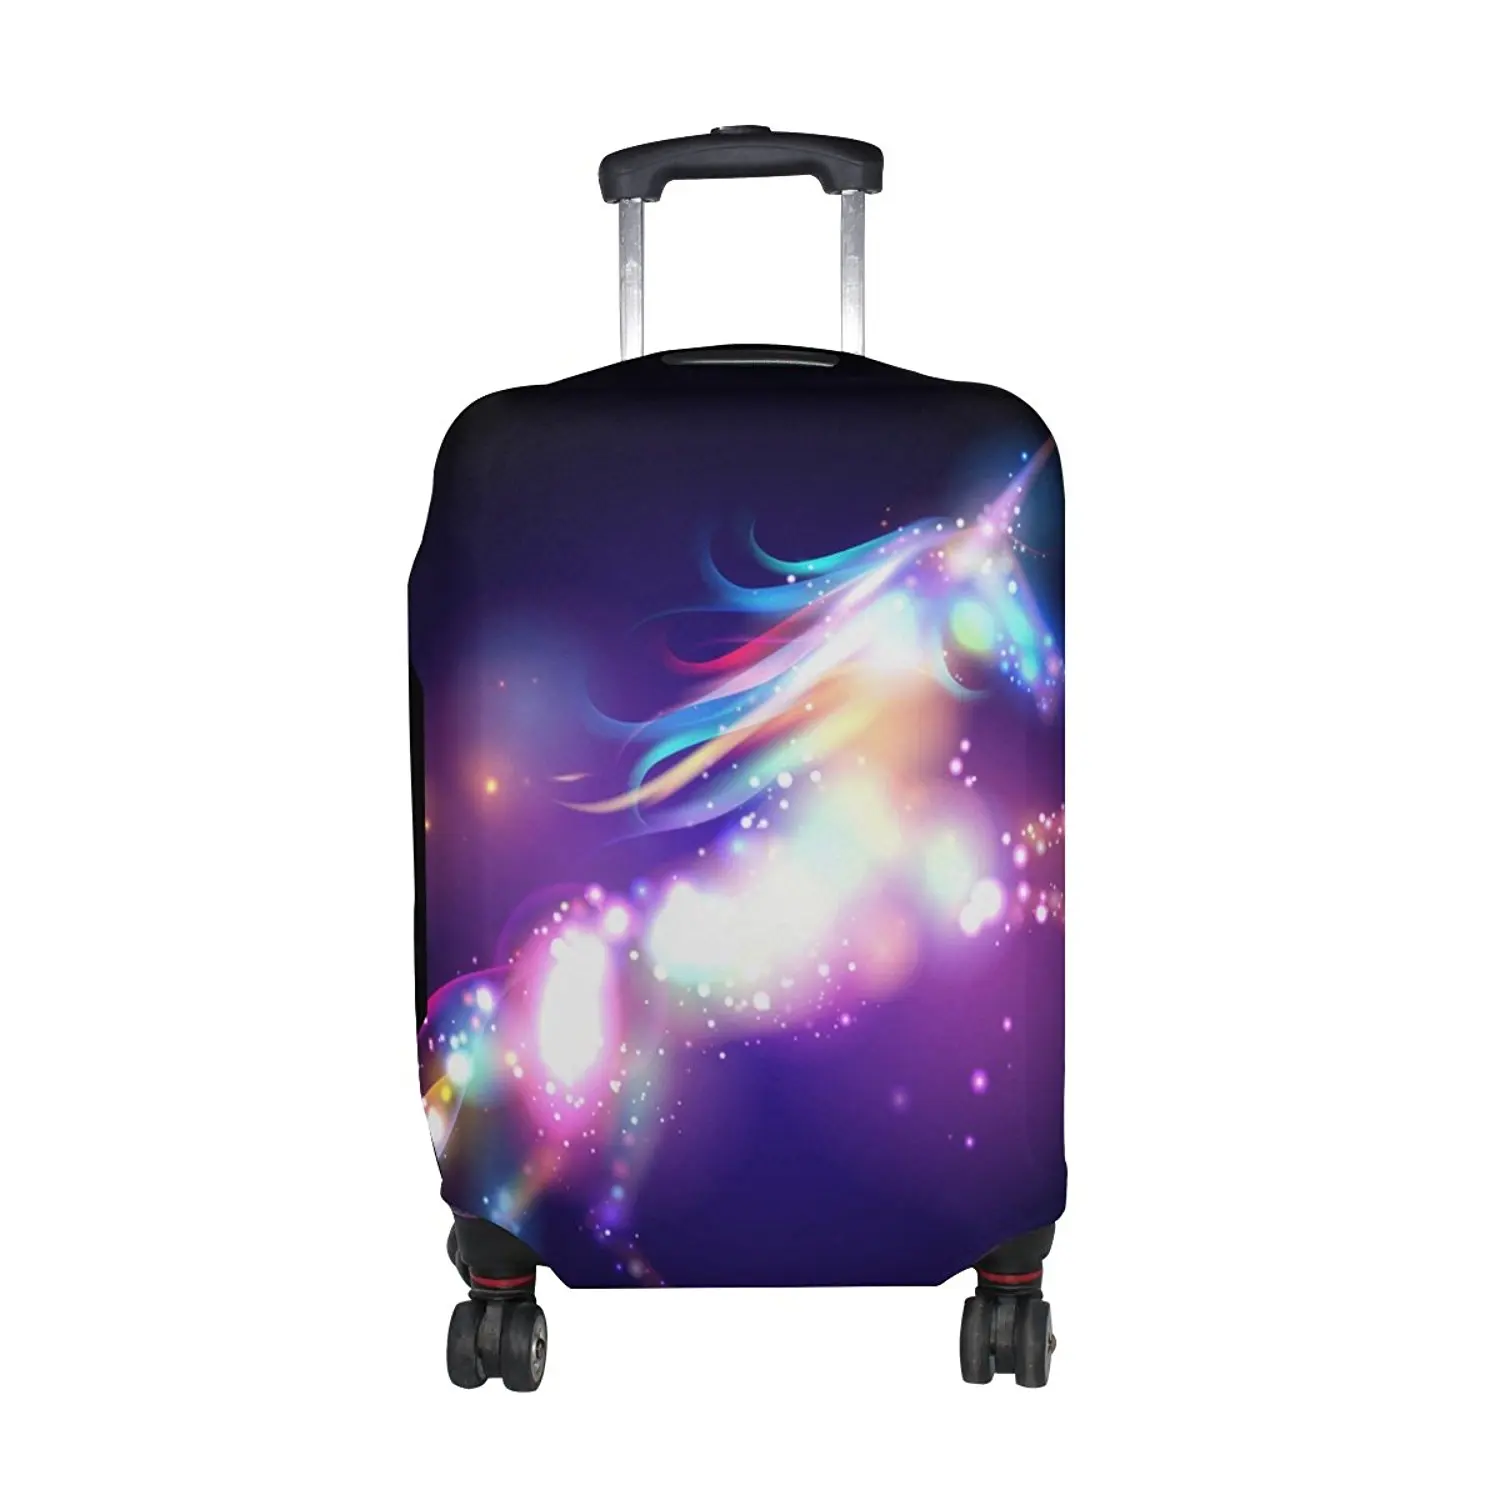 Cheap Unicorn Luggage, find Unicorn Luggage deals on line at Alibaba.com